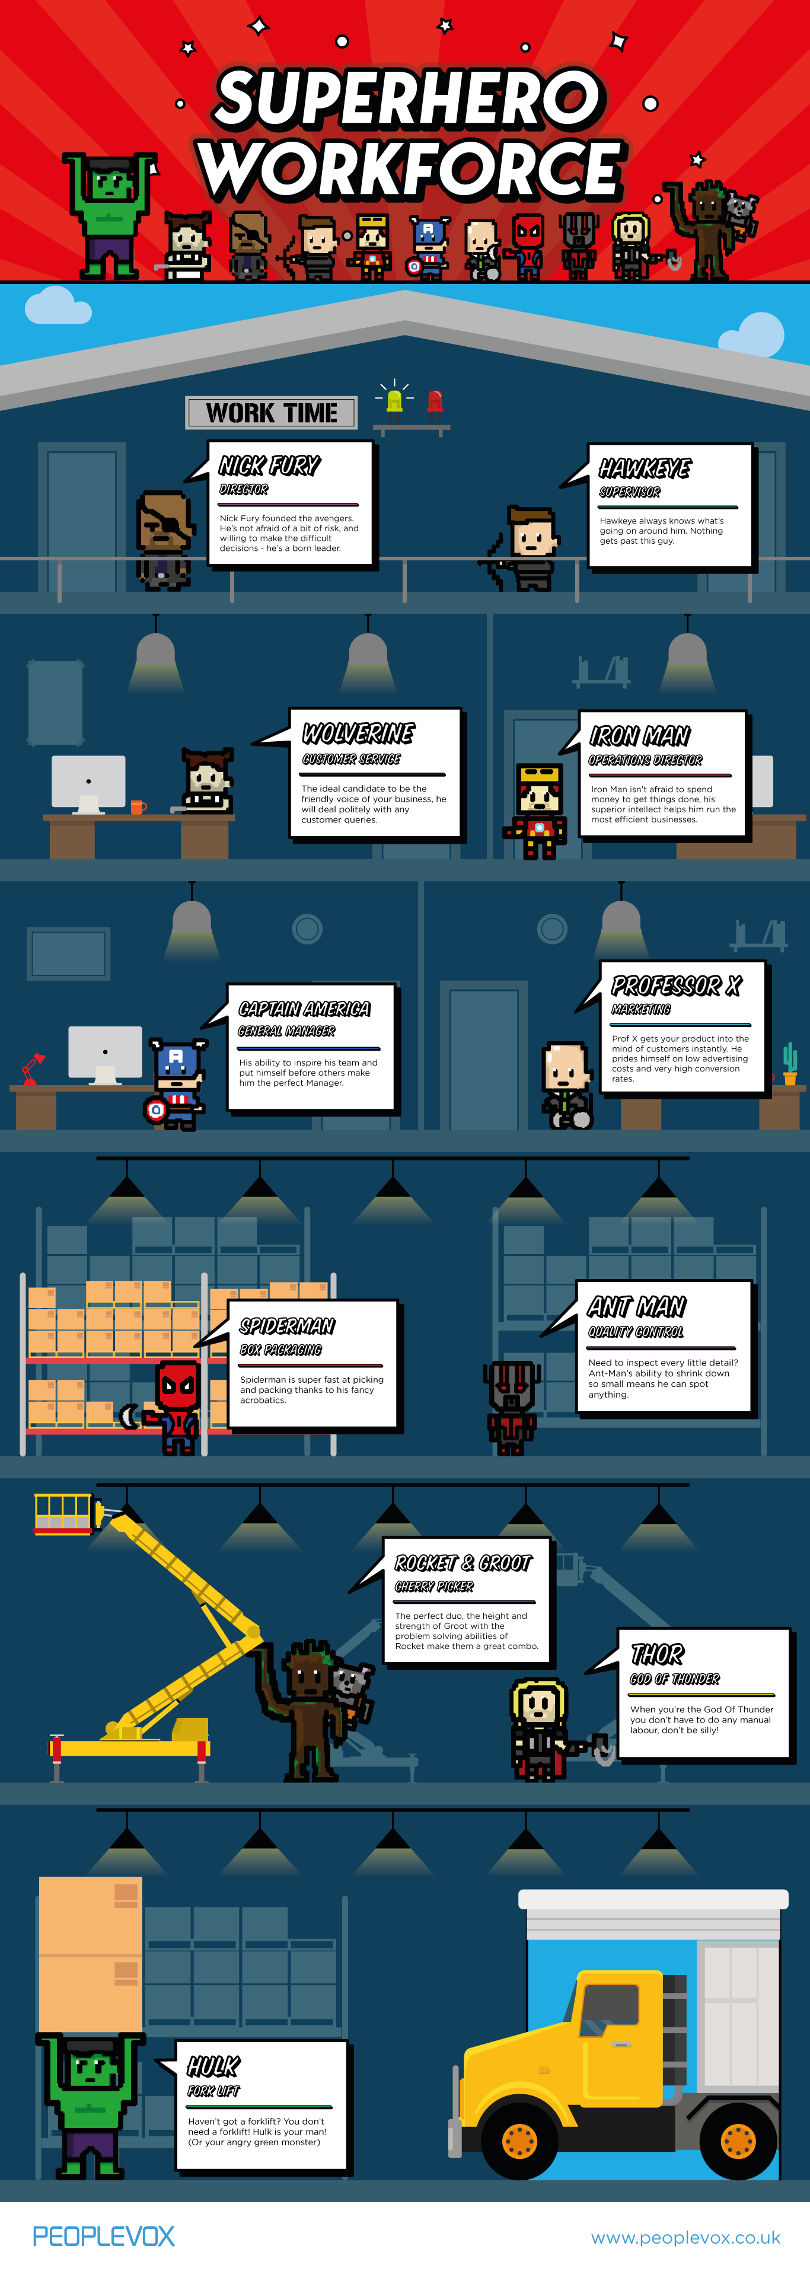 Superhero workforce infographic